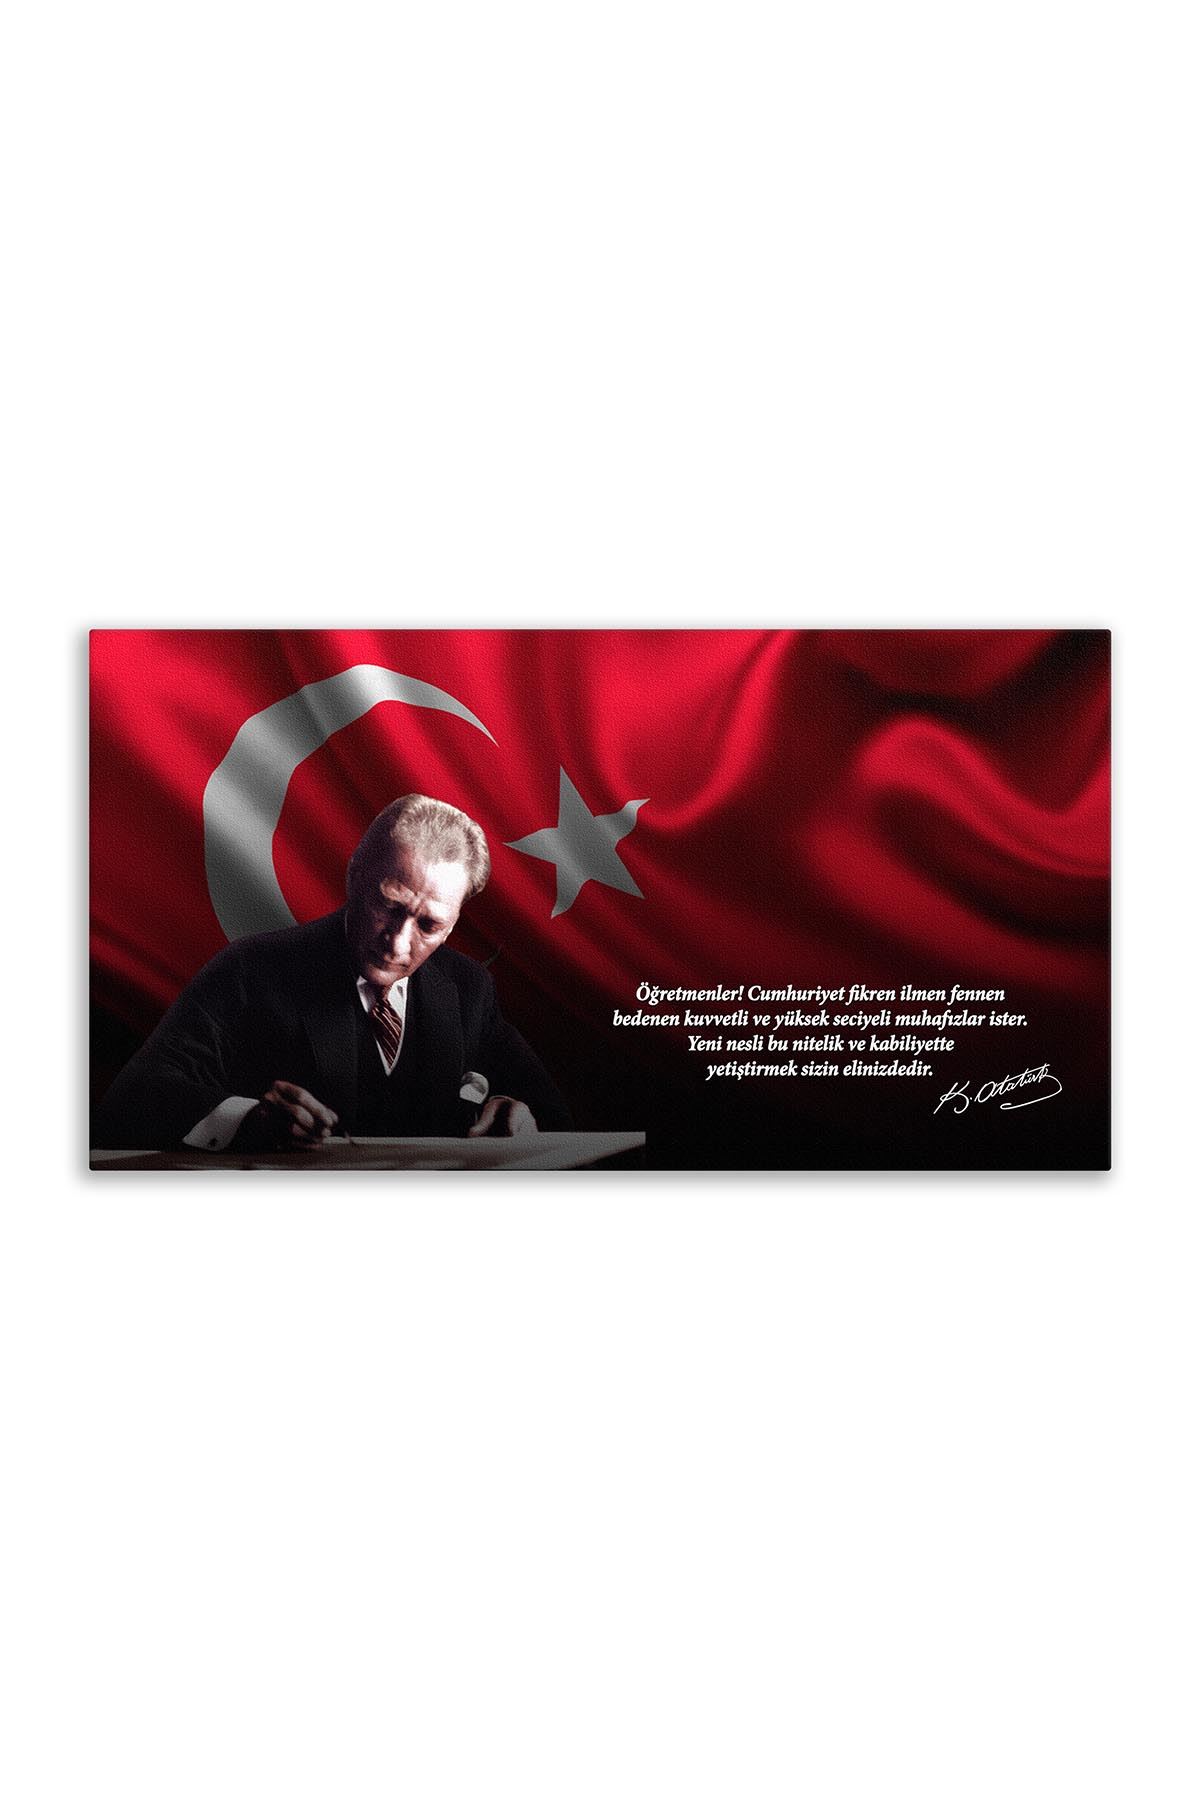 Atatürk Canvas Board With Turkish Flag | Printed Canvas Board | Digital Printing 